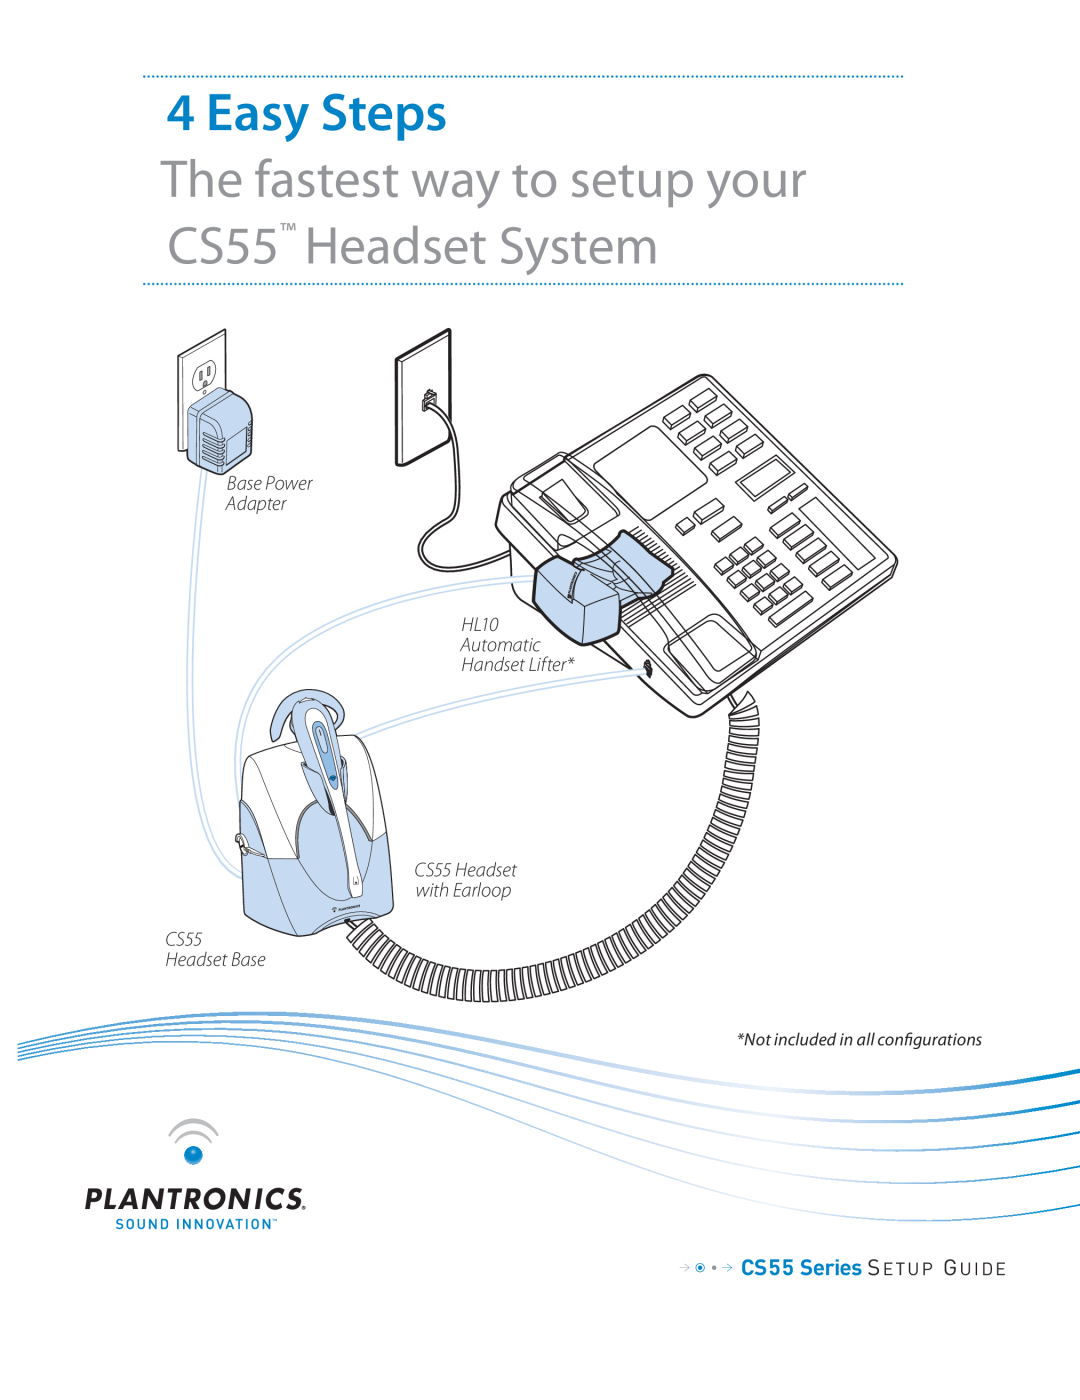 Plantronics CS55 Series setup guide Base Power Adapter HL10 Automatic Handset Lifter, CS55 Headset Base, Easy Steps 